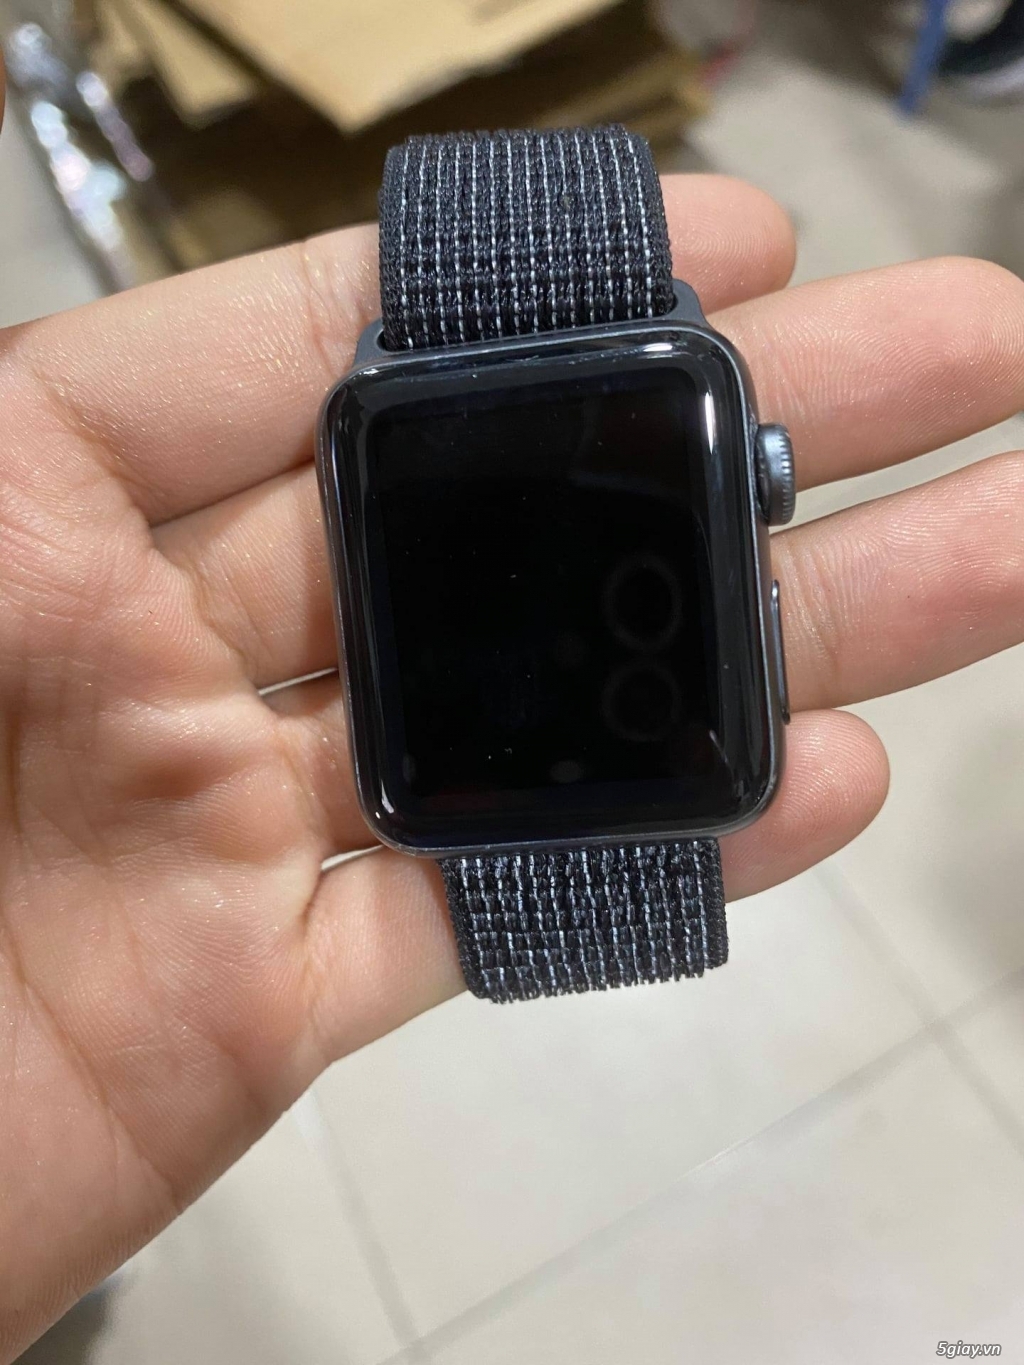 BÁN: Macbook/ Ipad/ Apple Watch cũ GIÁ TỐT - CÓ TRẢ GÓP - 1